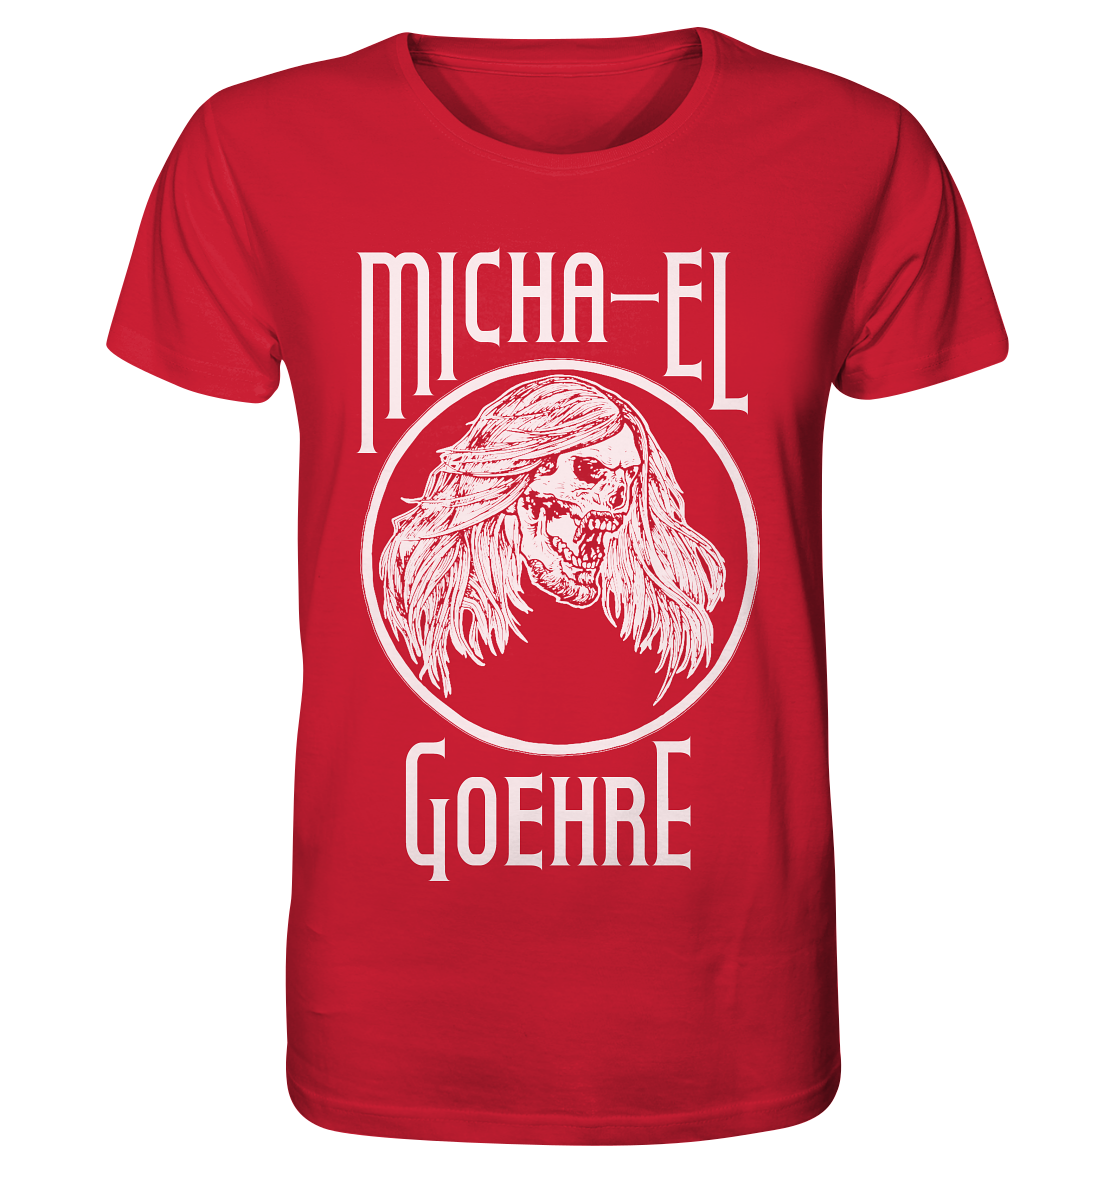 Ein rotes Micha-El Goehre - offizielles Fan-Shirt - Bio-Shirt mit Artbookings/Shirtigo-Merchandise.